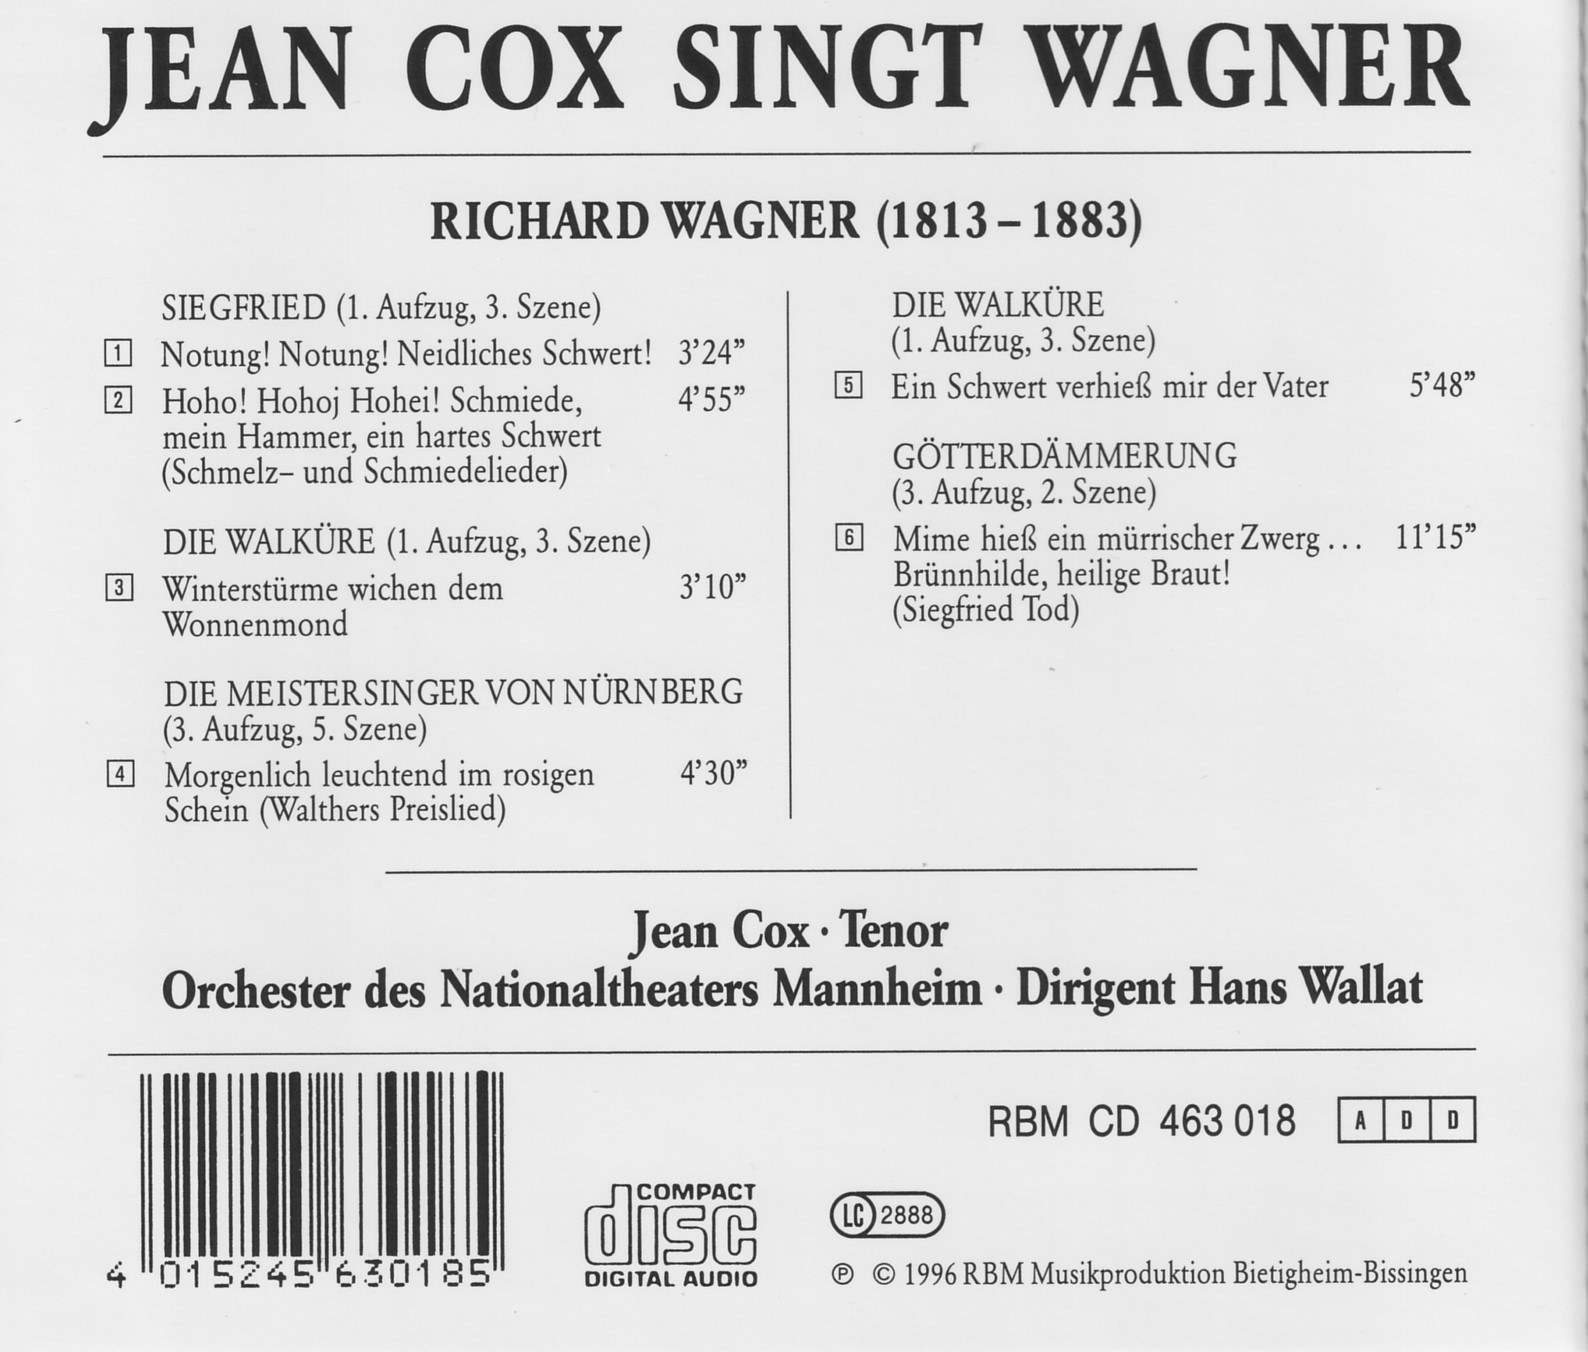 Jean Cox singt Wagner